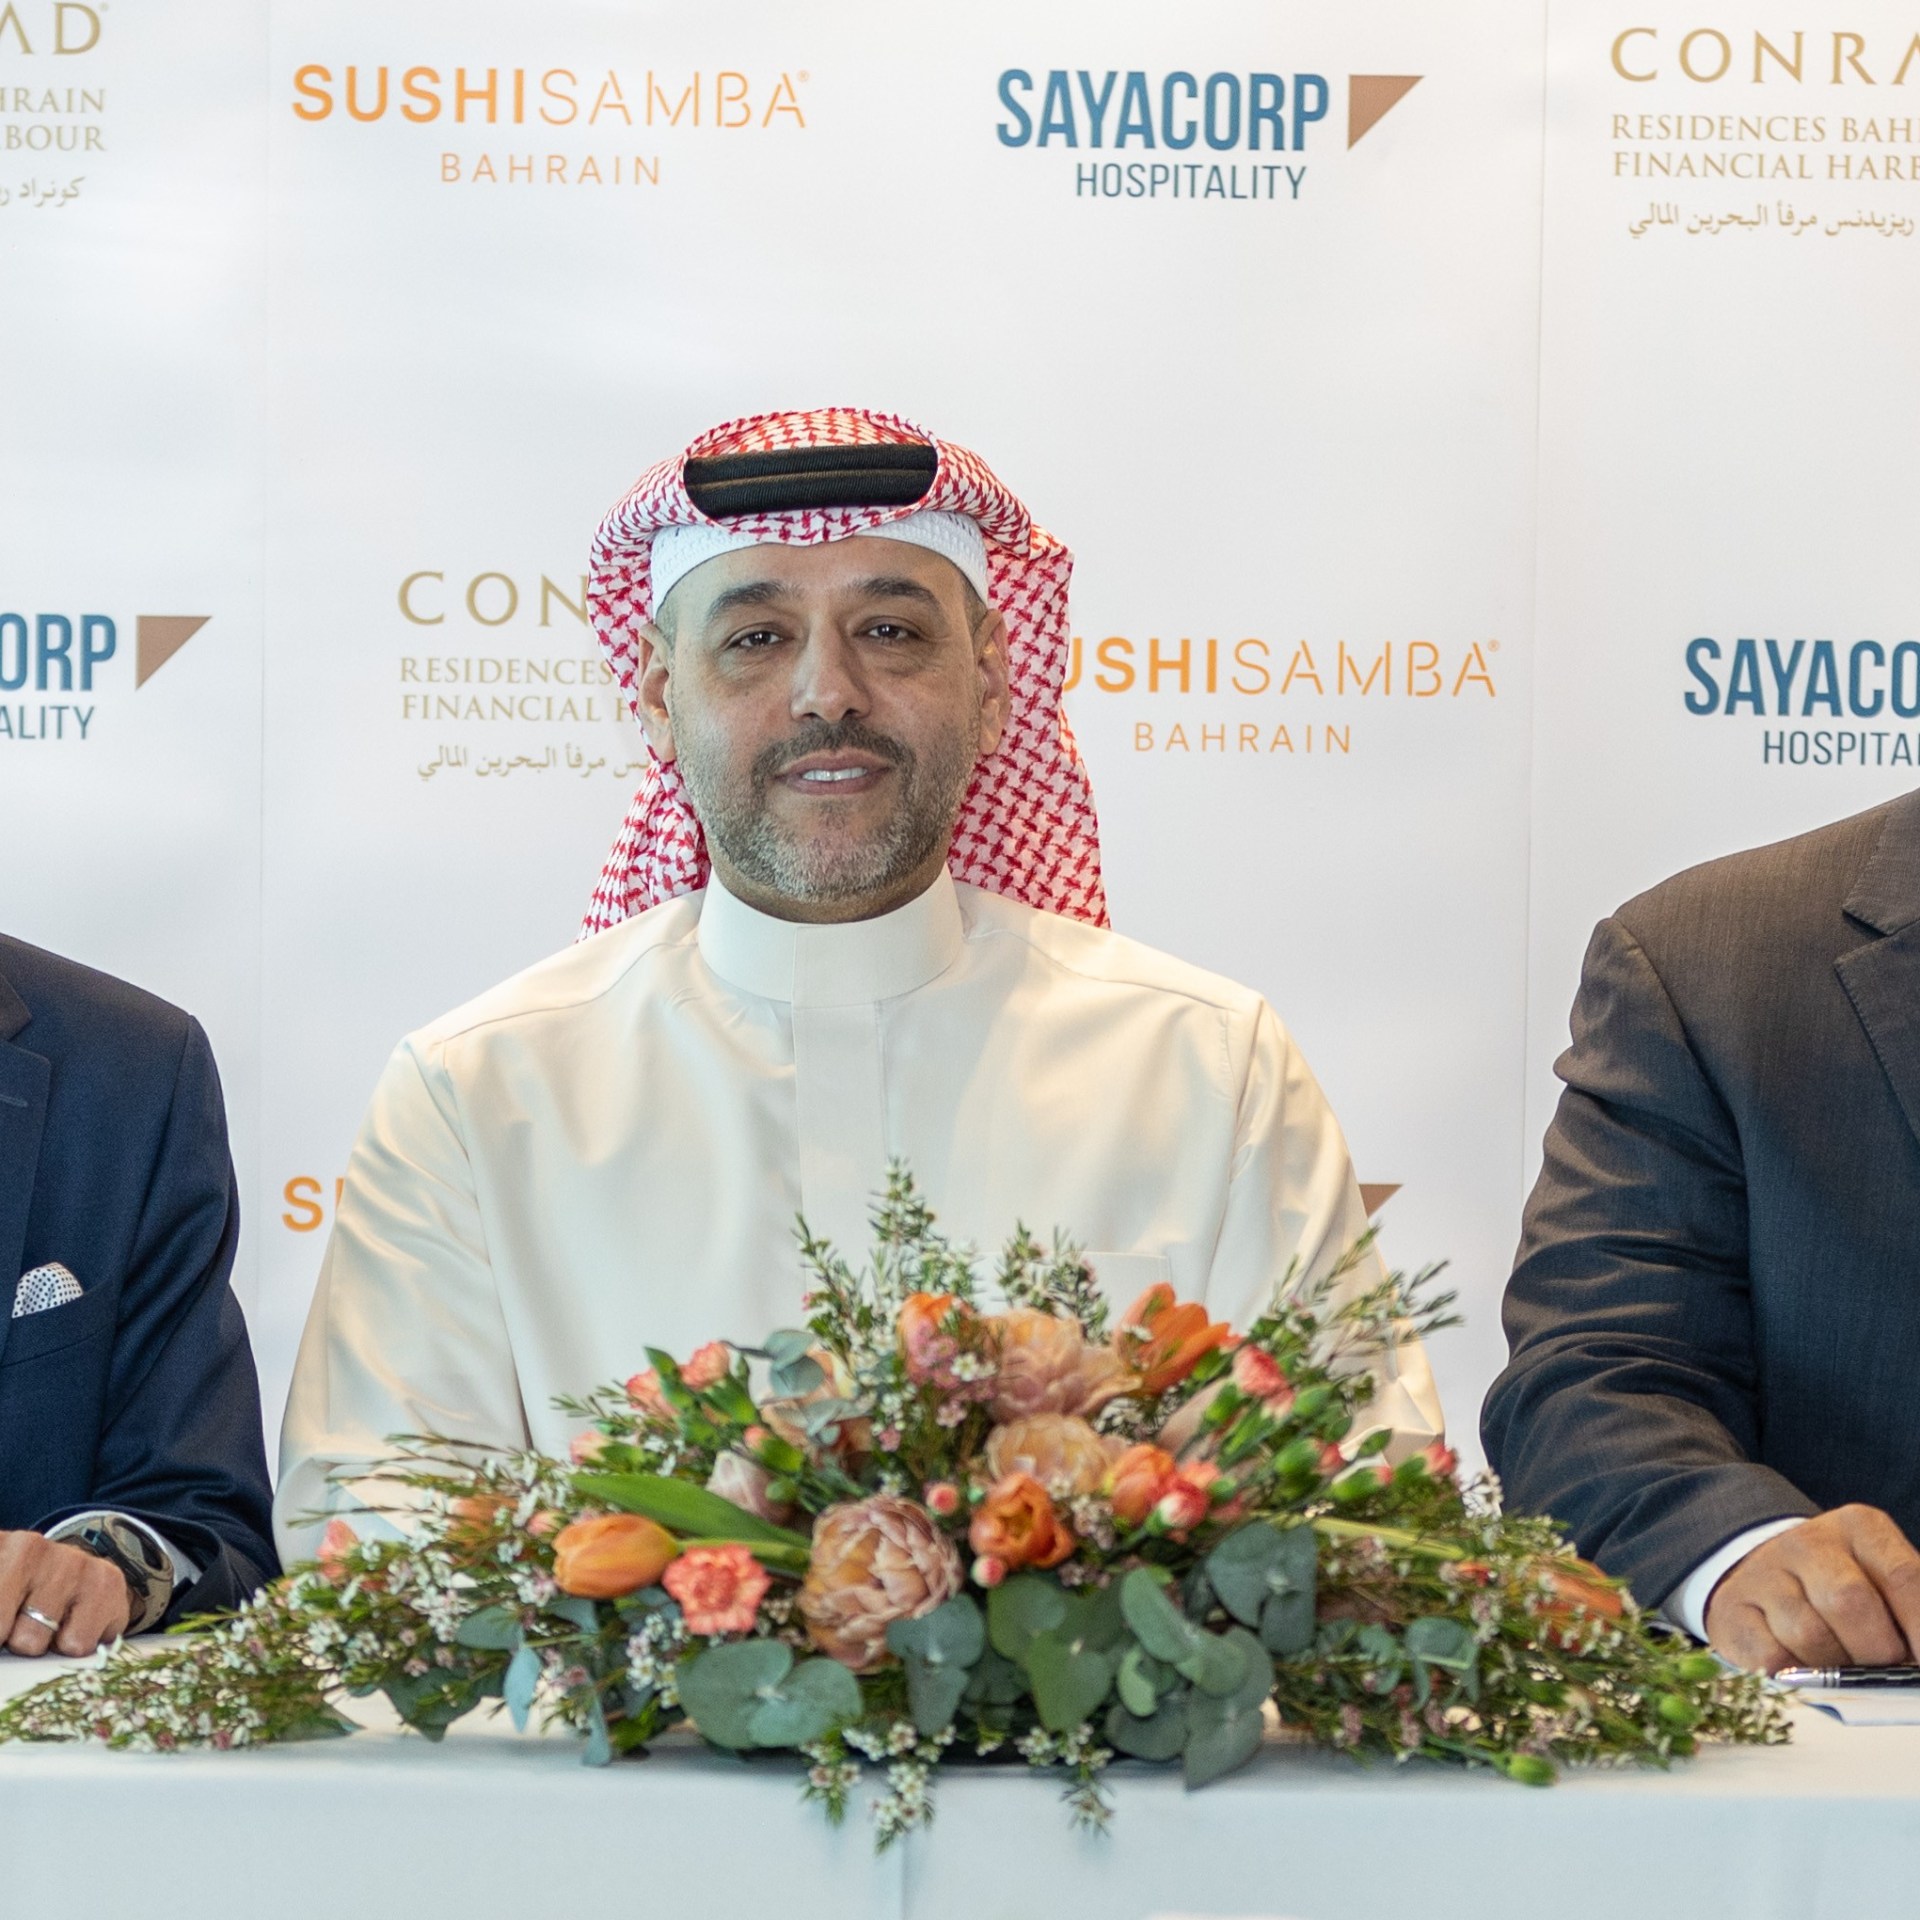 SUSHISAMBA Conrad Residences Bahrain Financial Harbour Signing